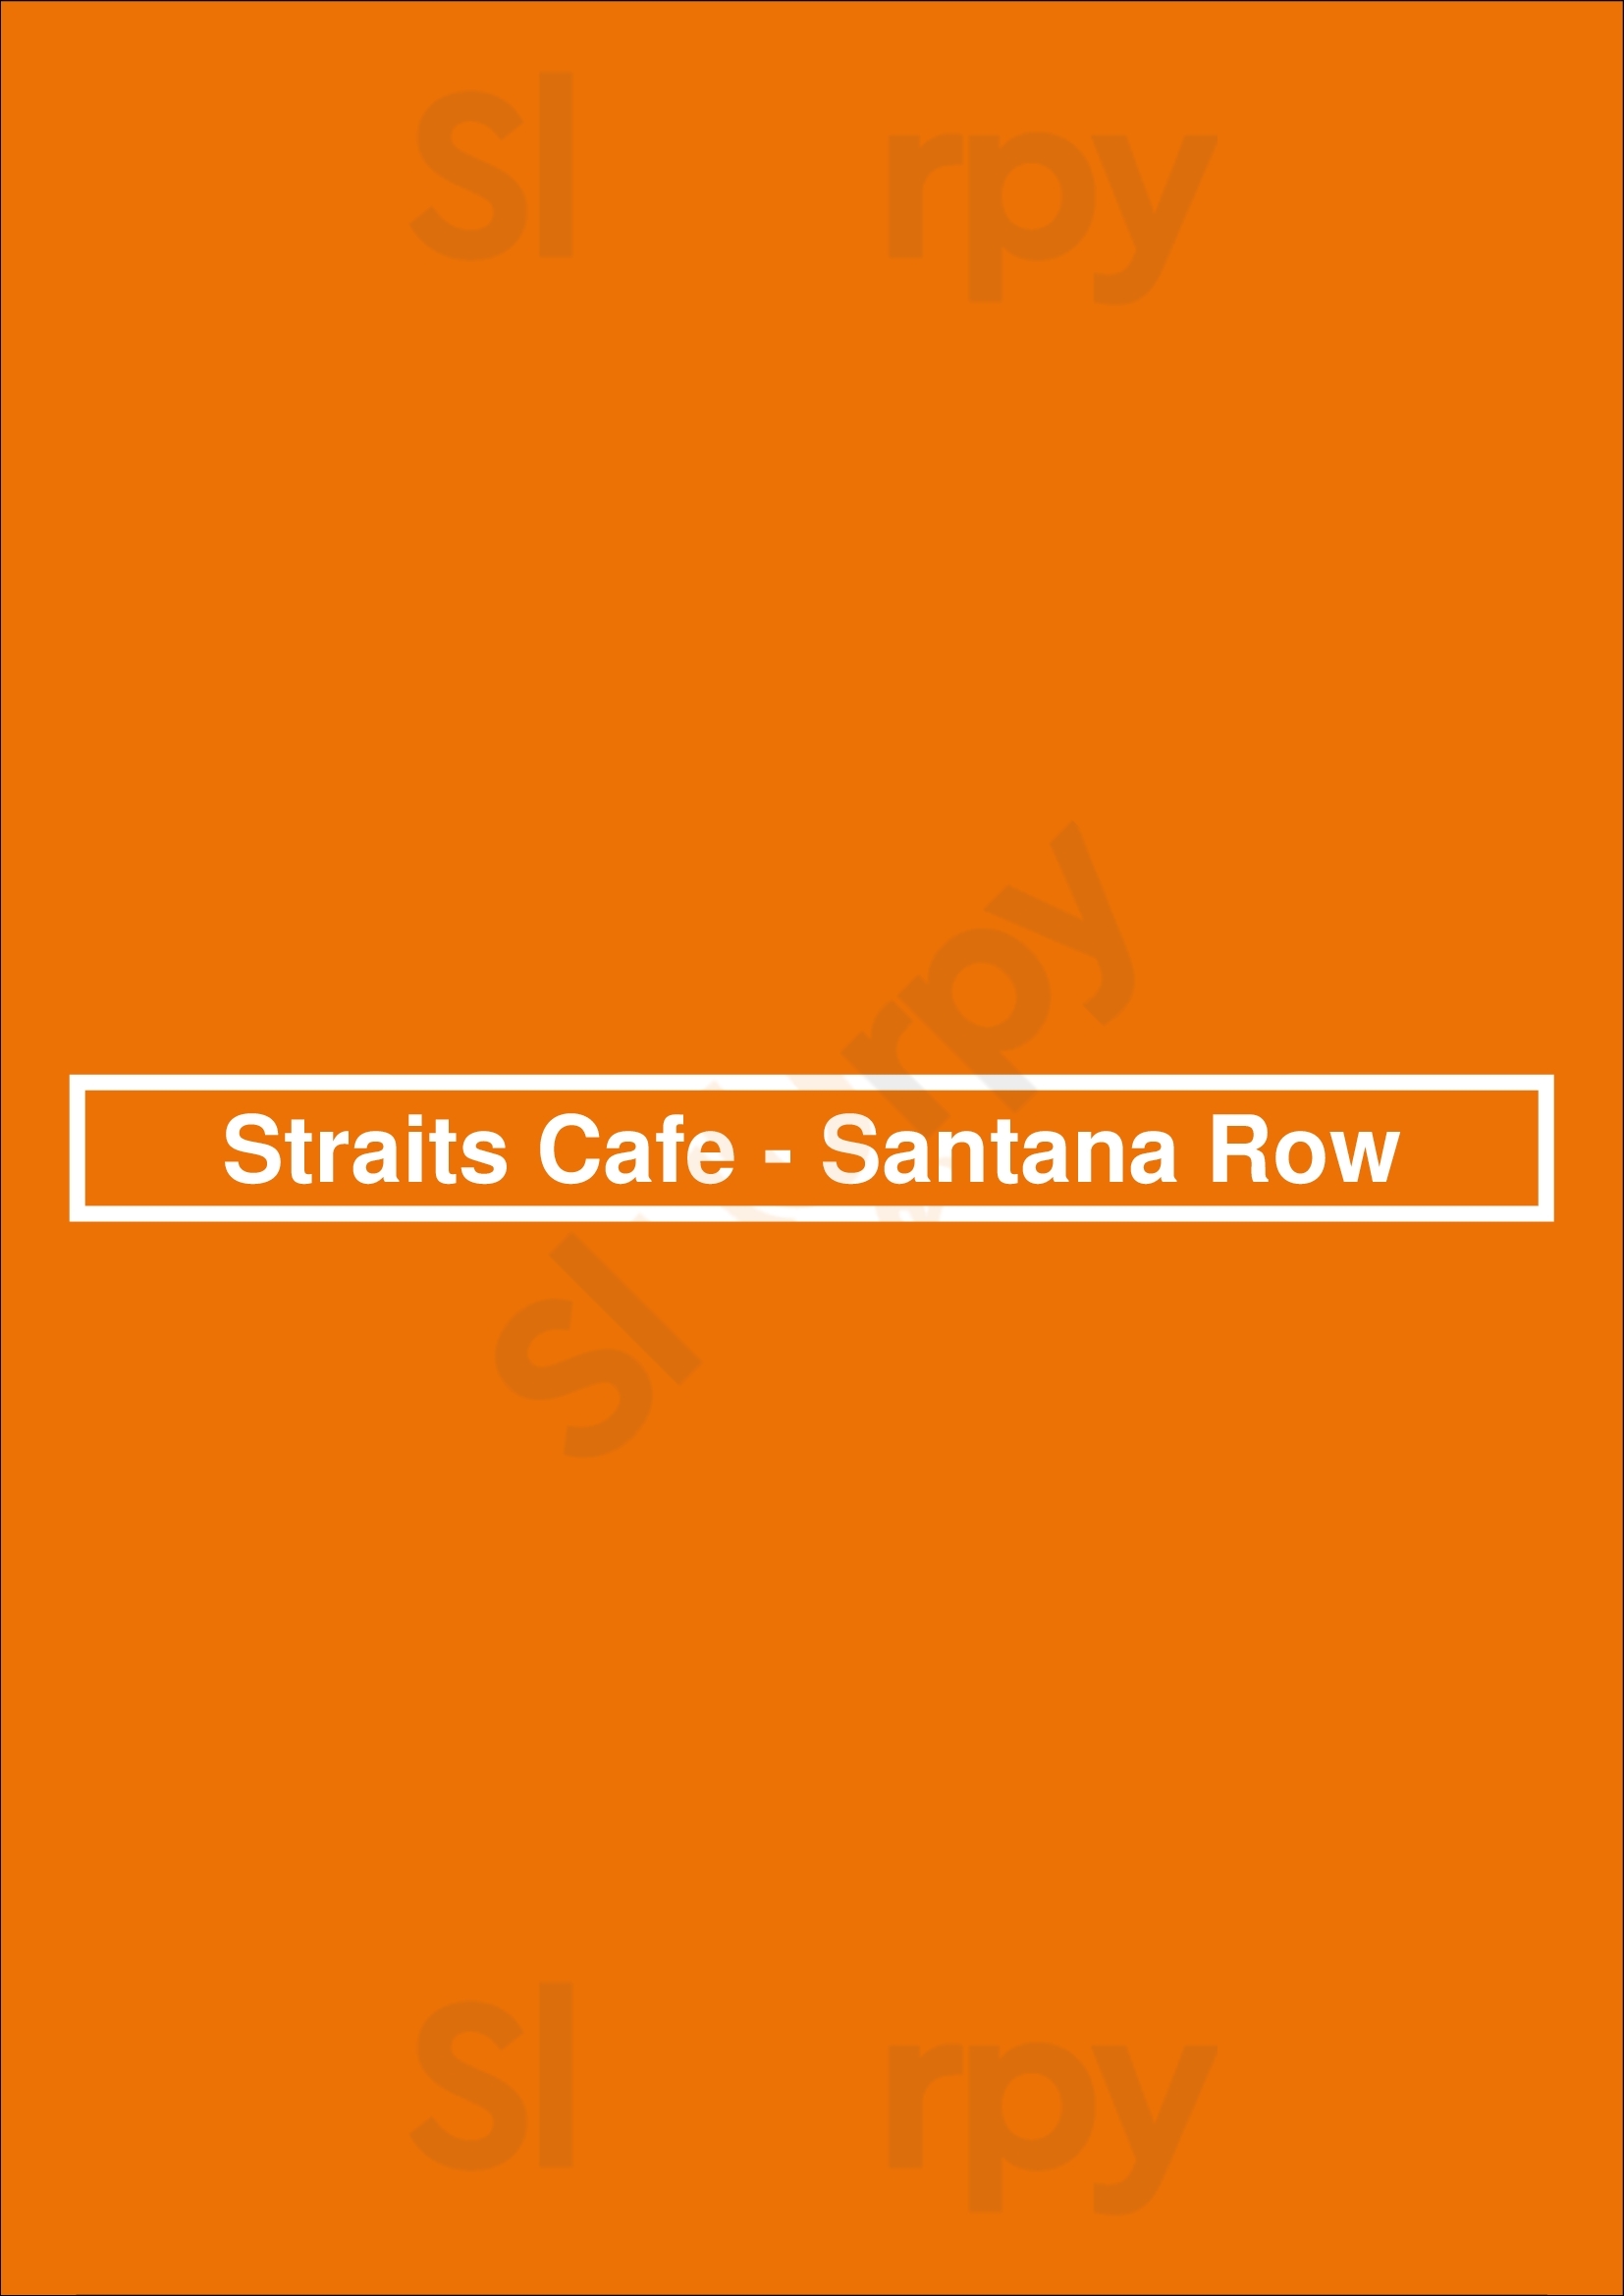 Straits Cafe - Santana Row San Jose Menu - 1